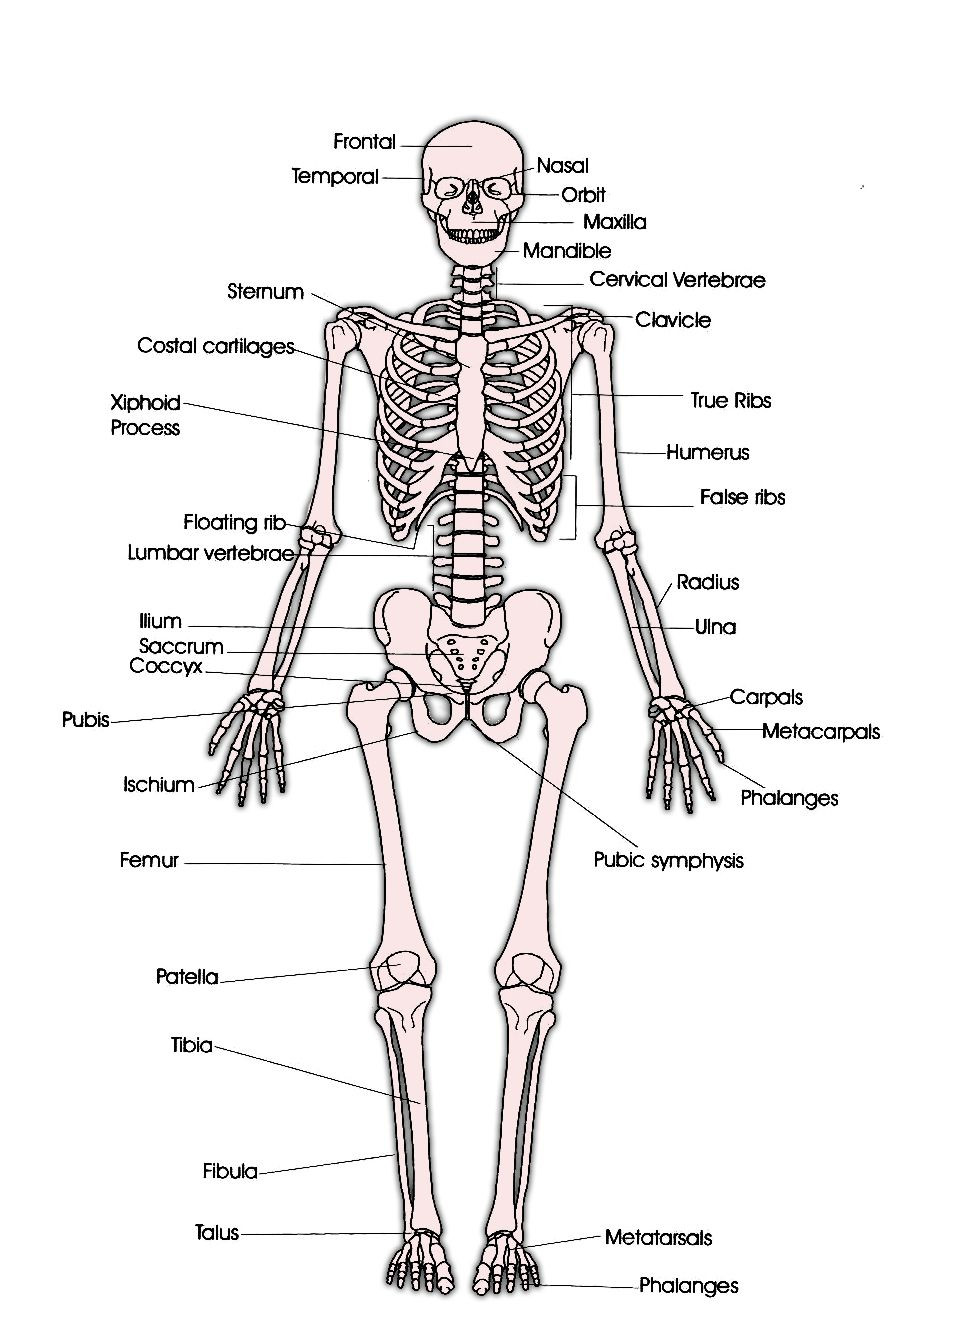 Skeletal System Worksheet Pdf Skeleton Parts Labeled Gallery Human Anatomy Reference